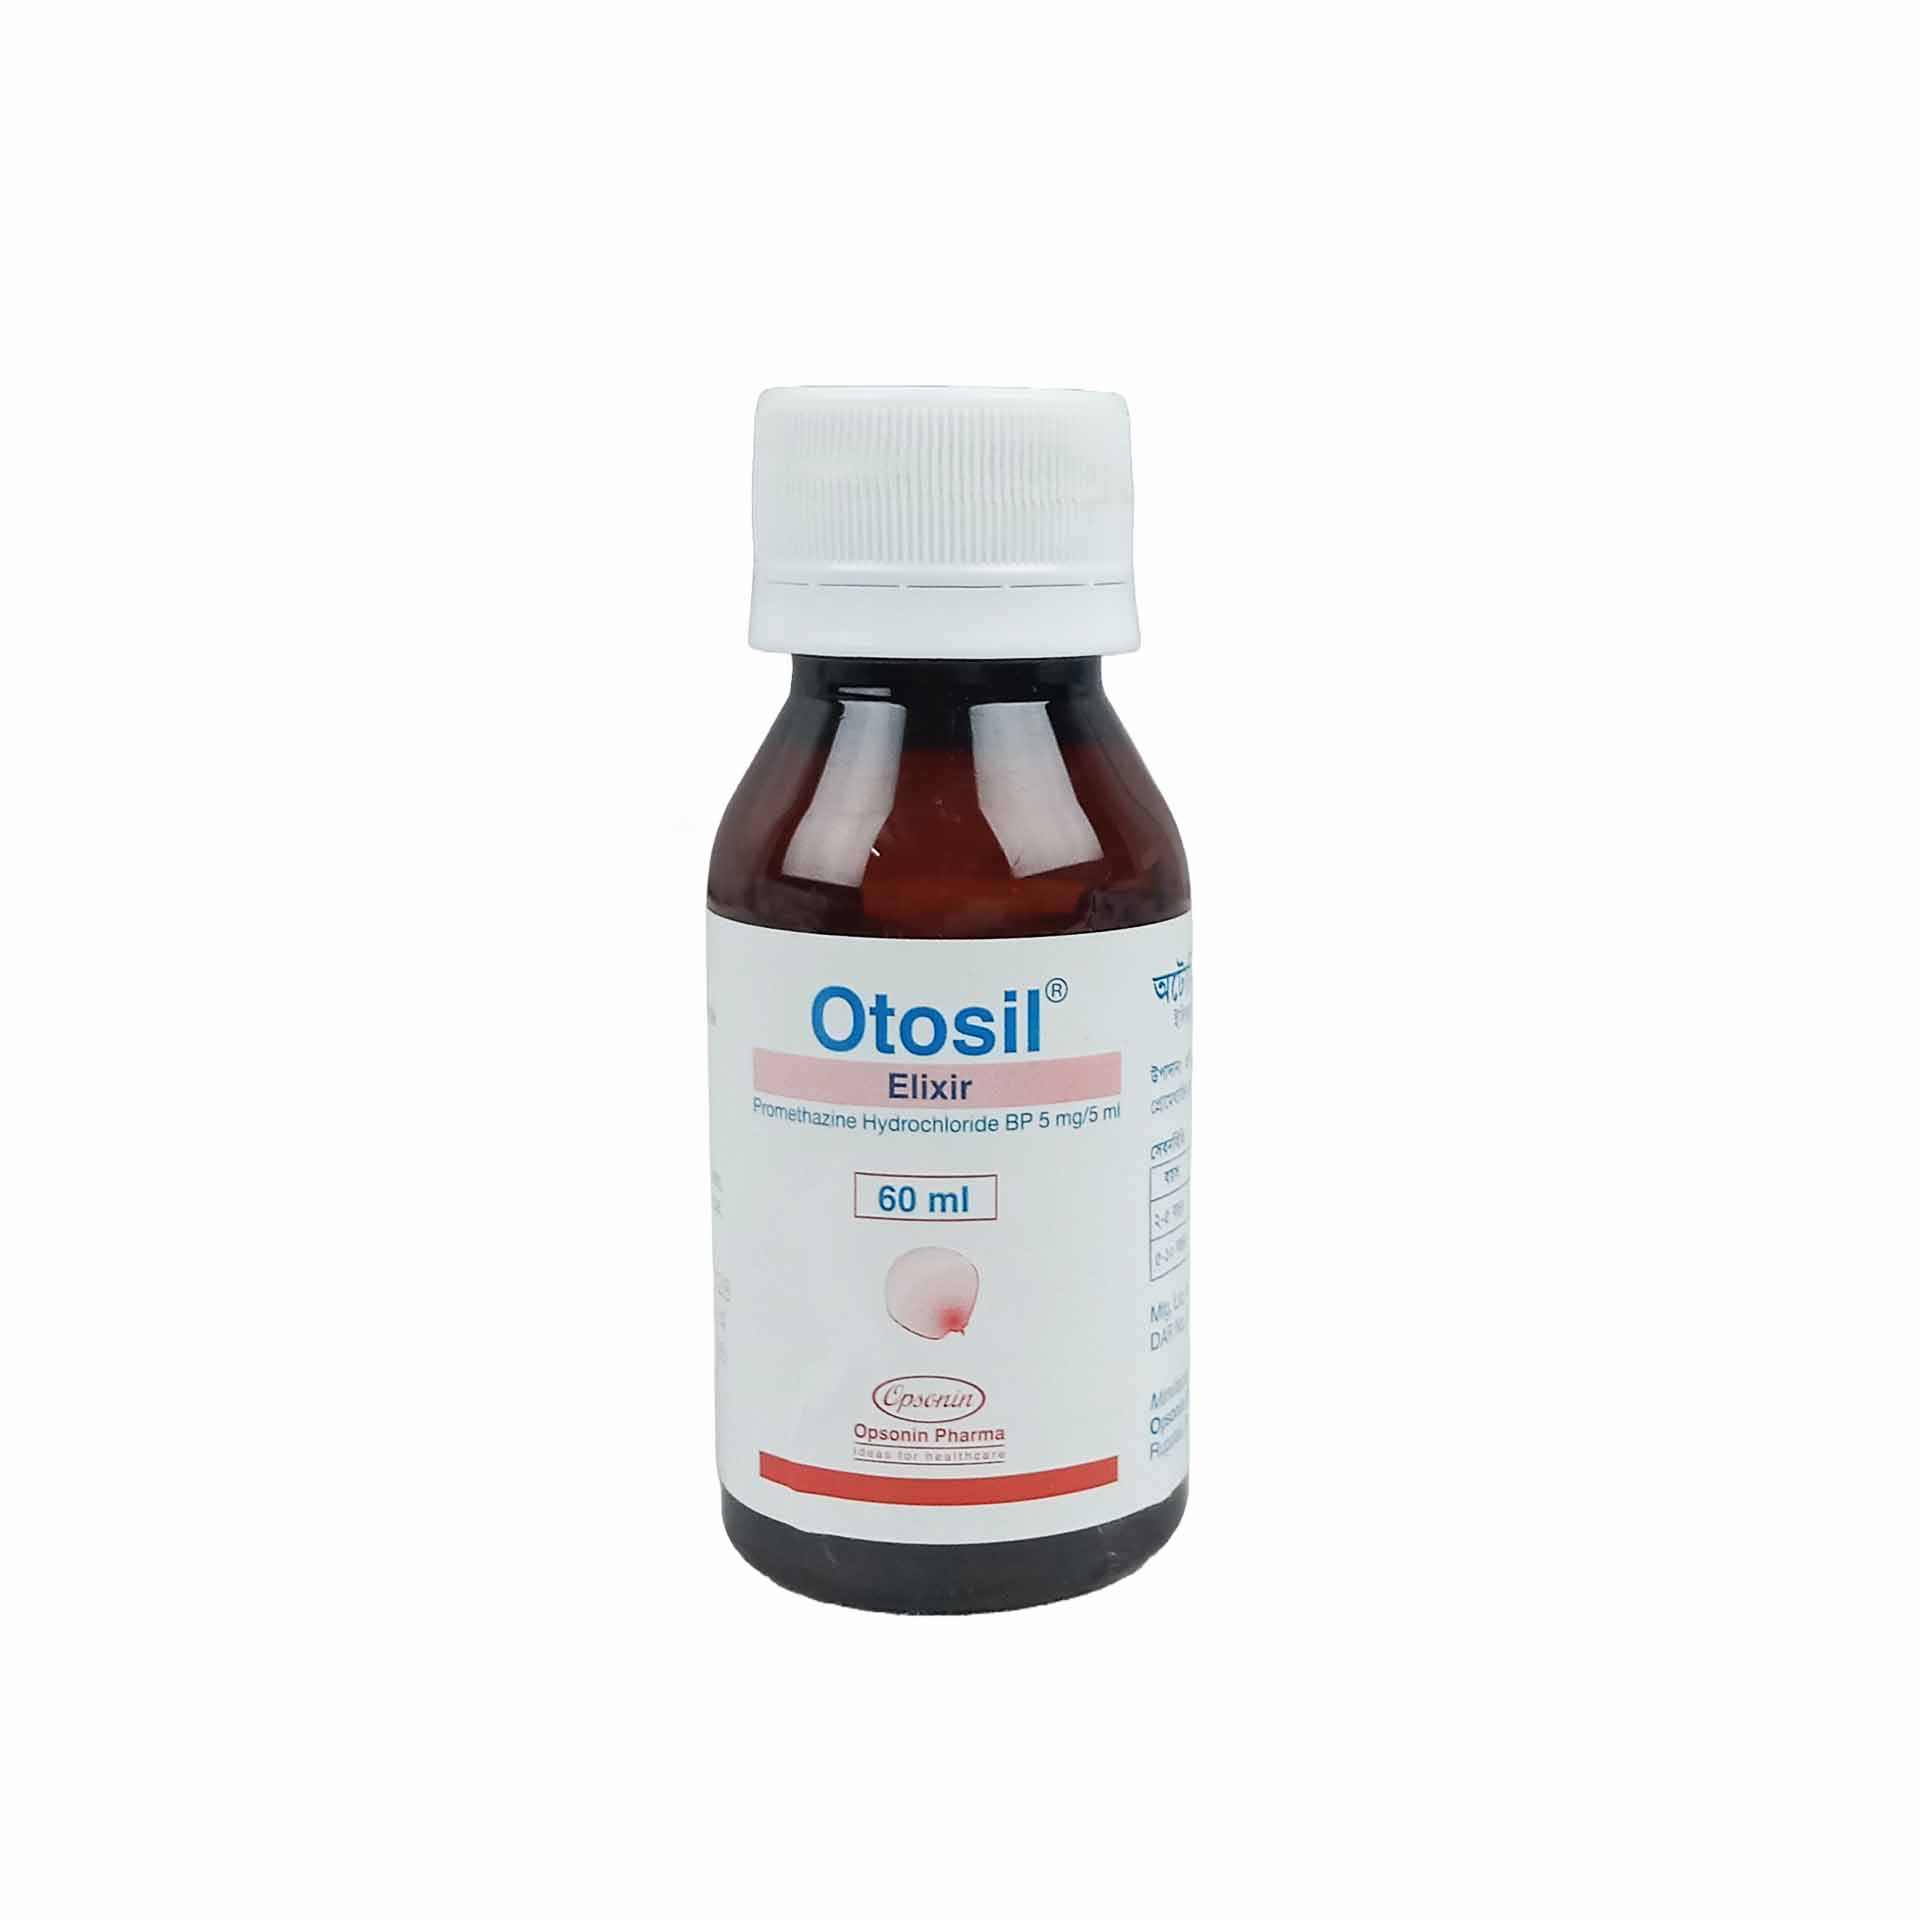 Otosil 5mg/5ml Syrup